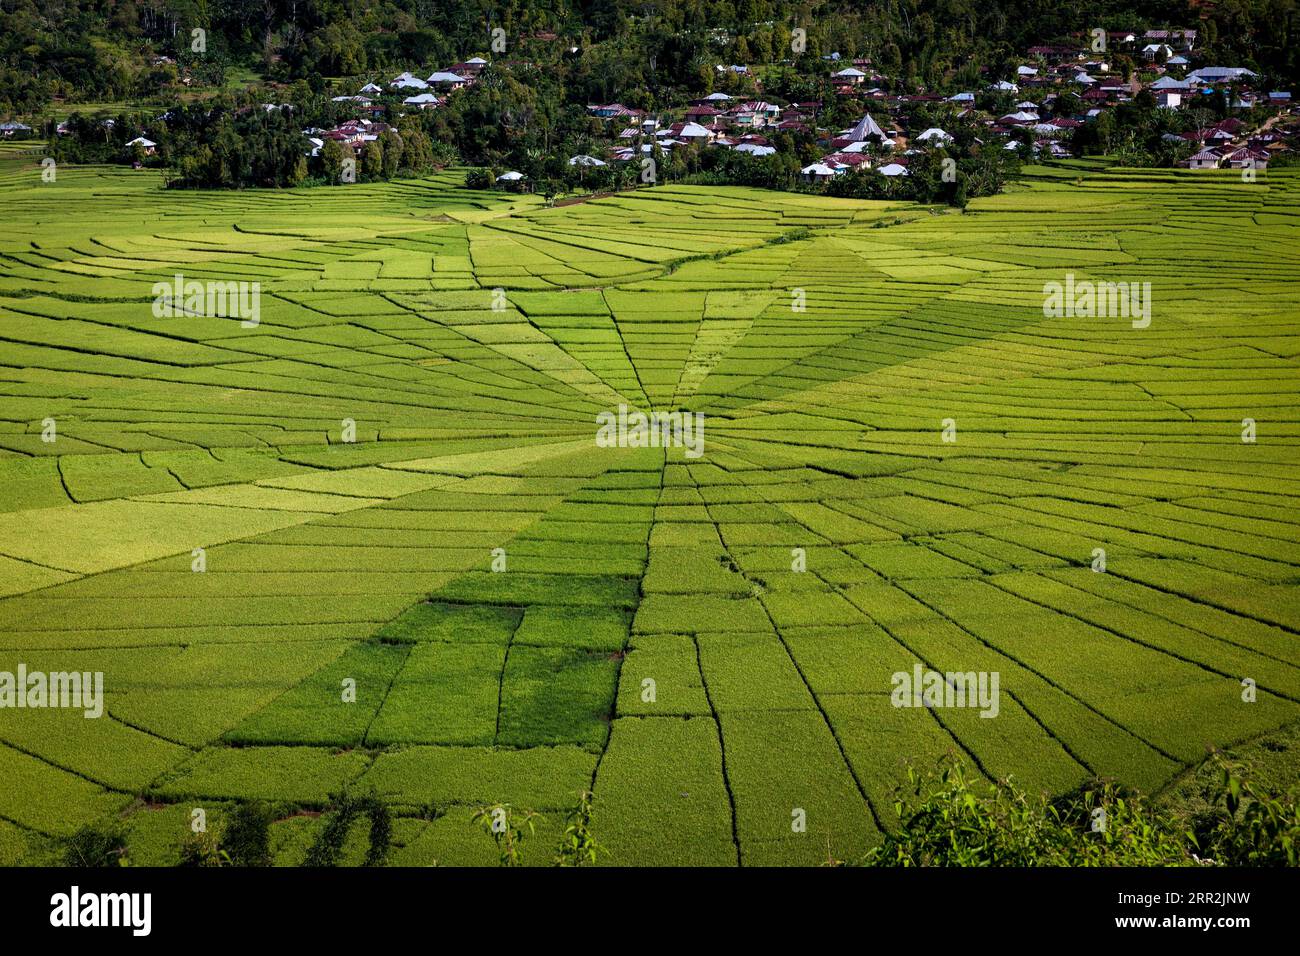 Spiderweb rice paddies, Cancar, Flores, Nusa Tenggara Timur, Indonesia Stock Photo